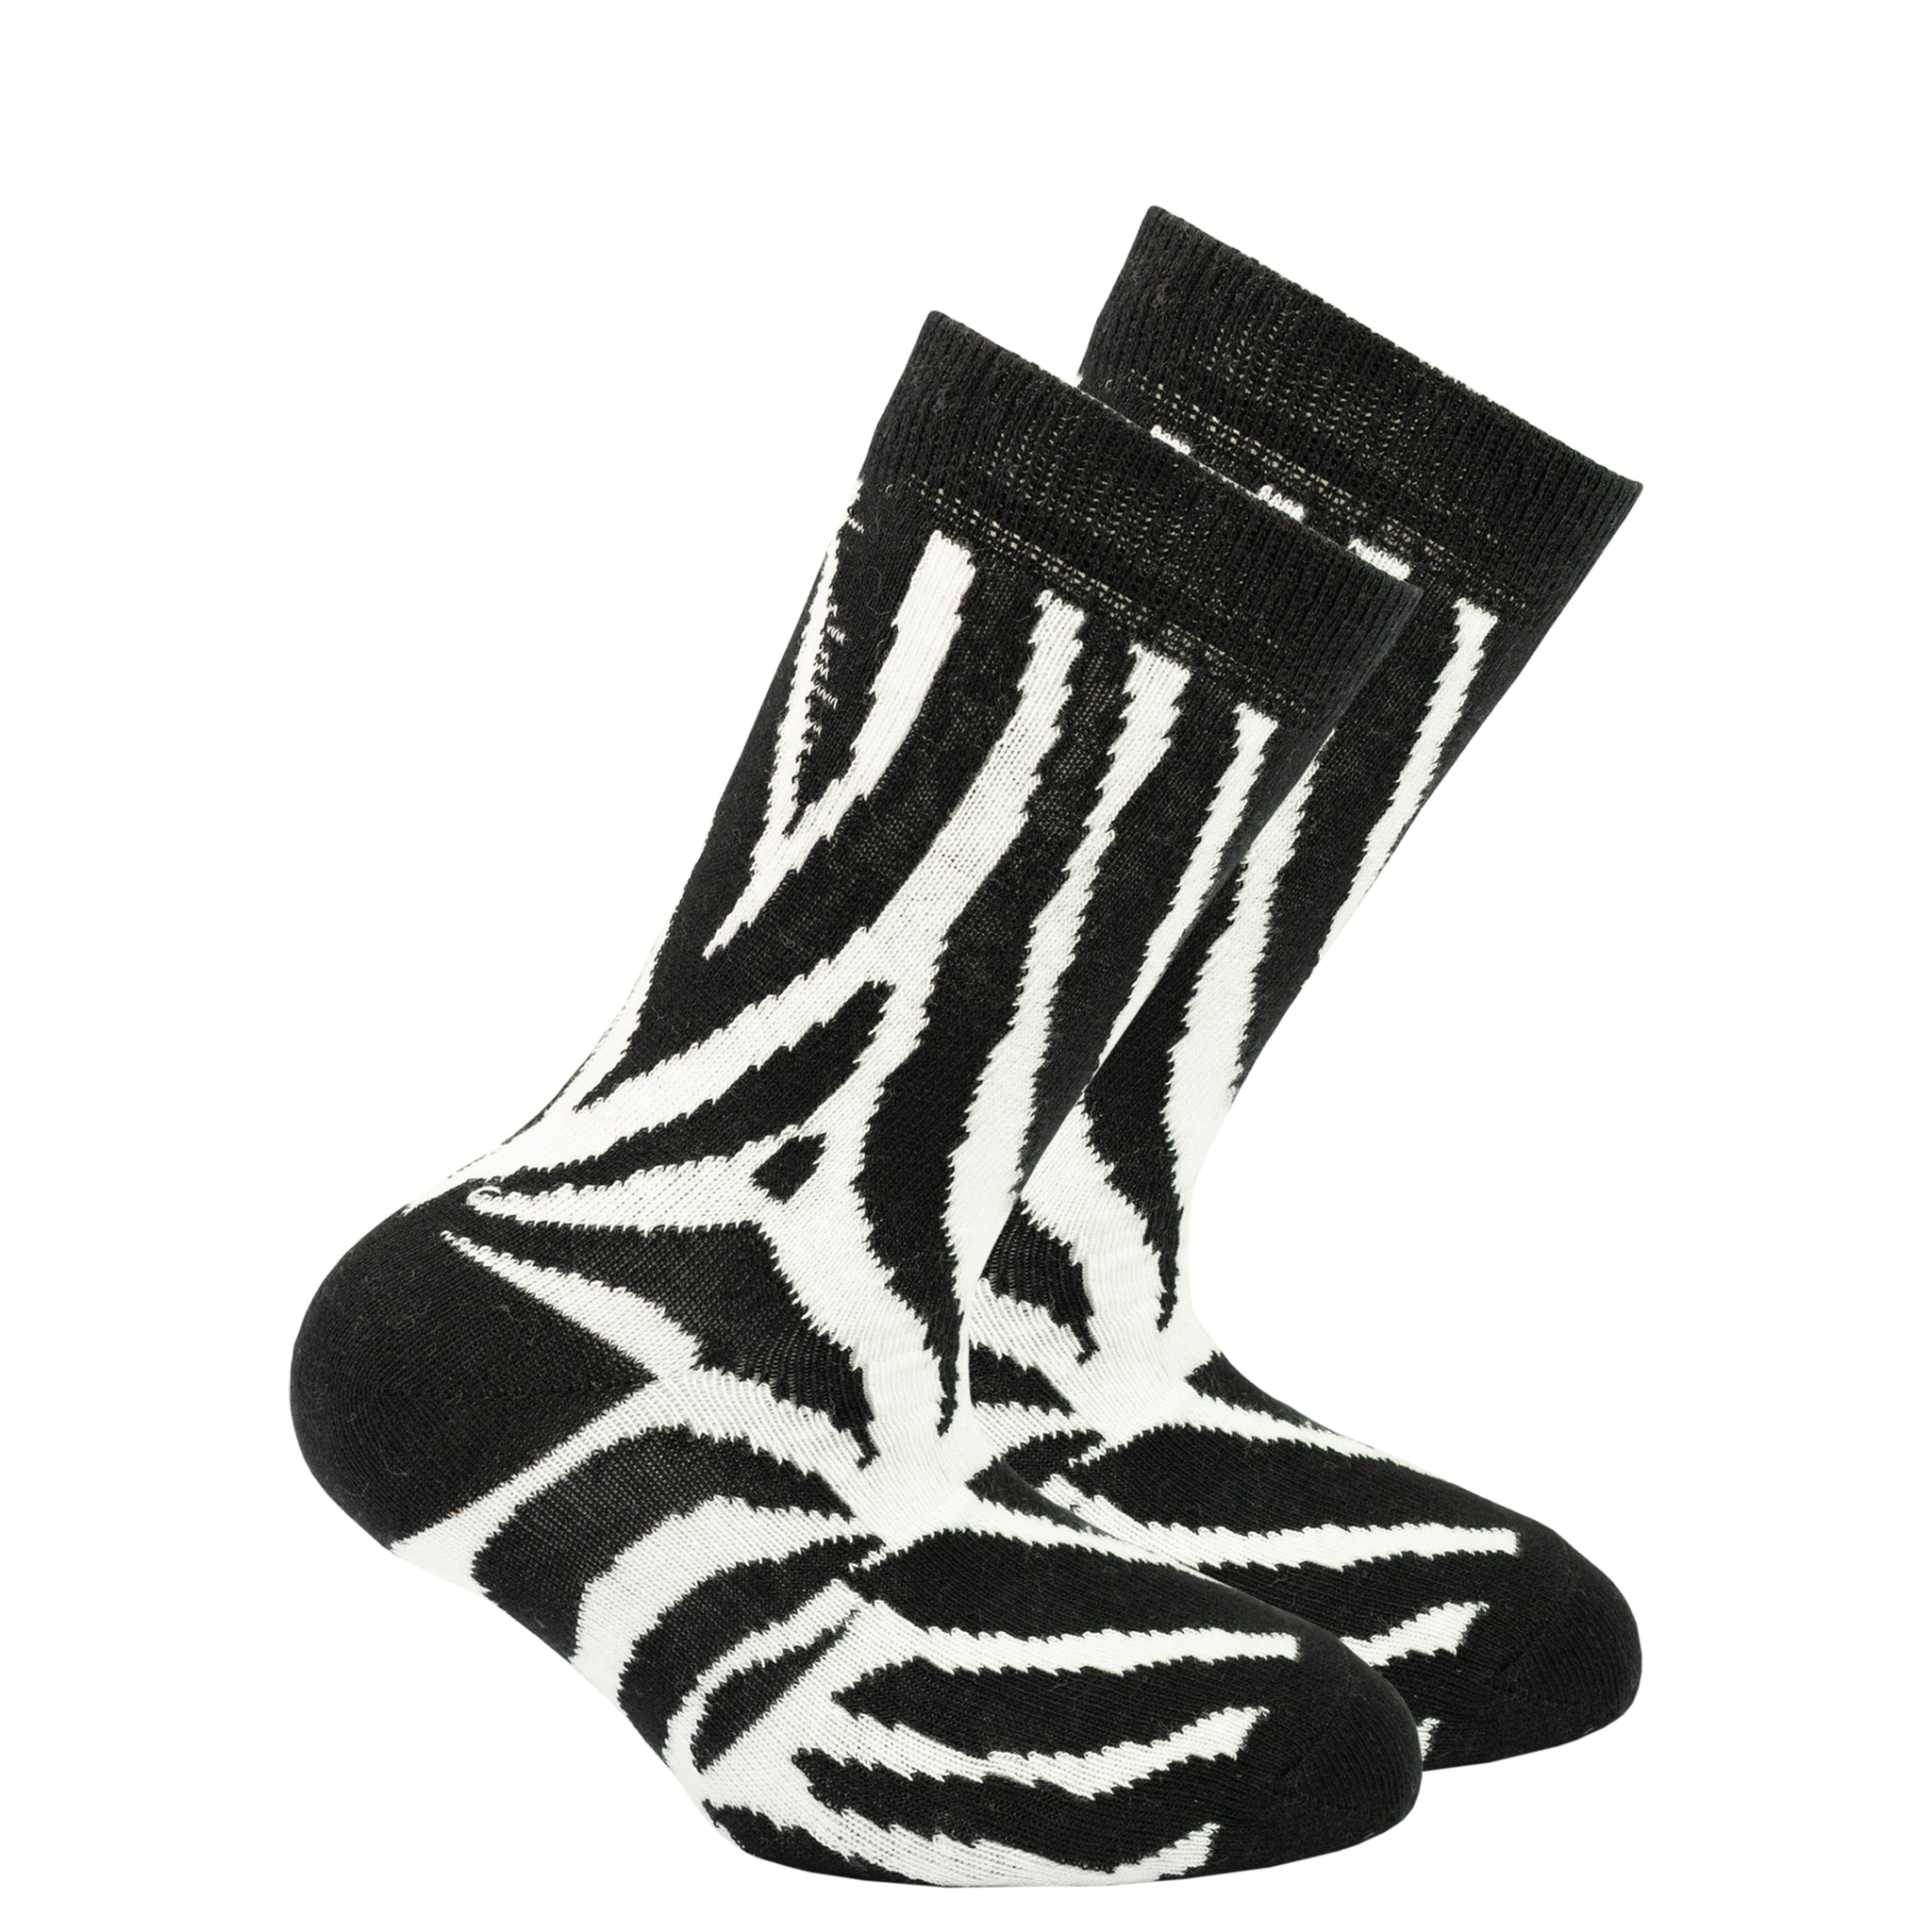 Kids Zebra Socks black and white